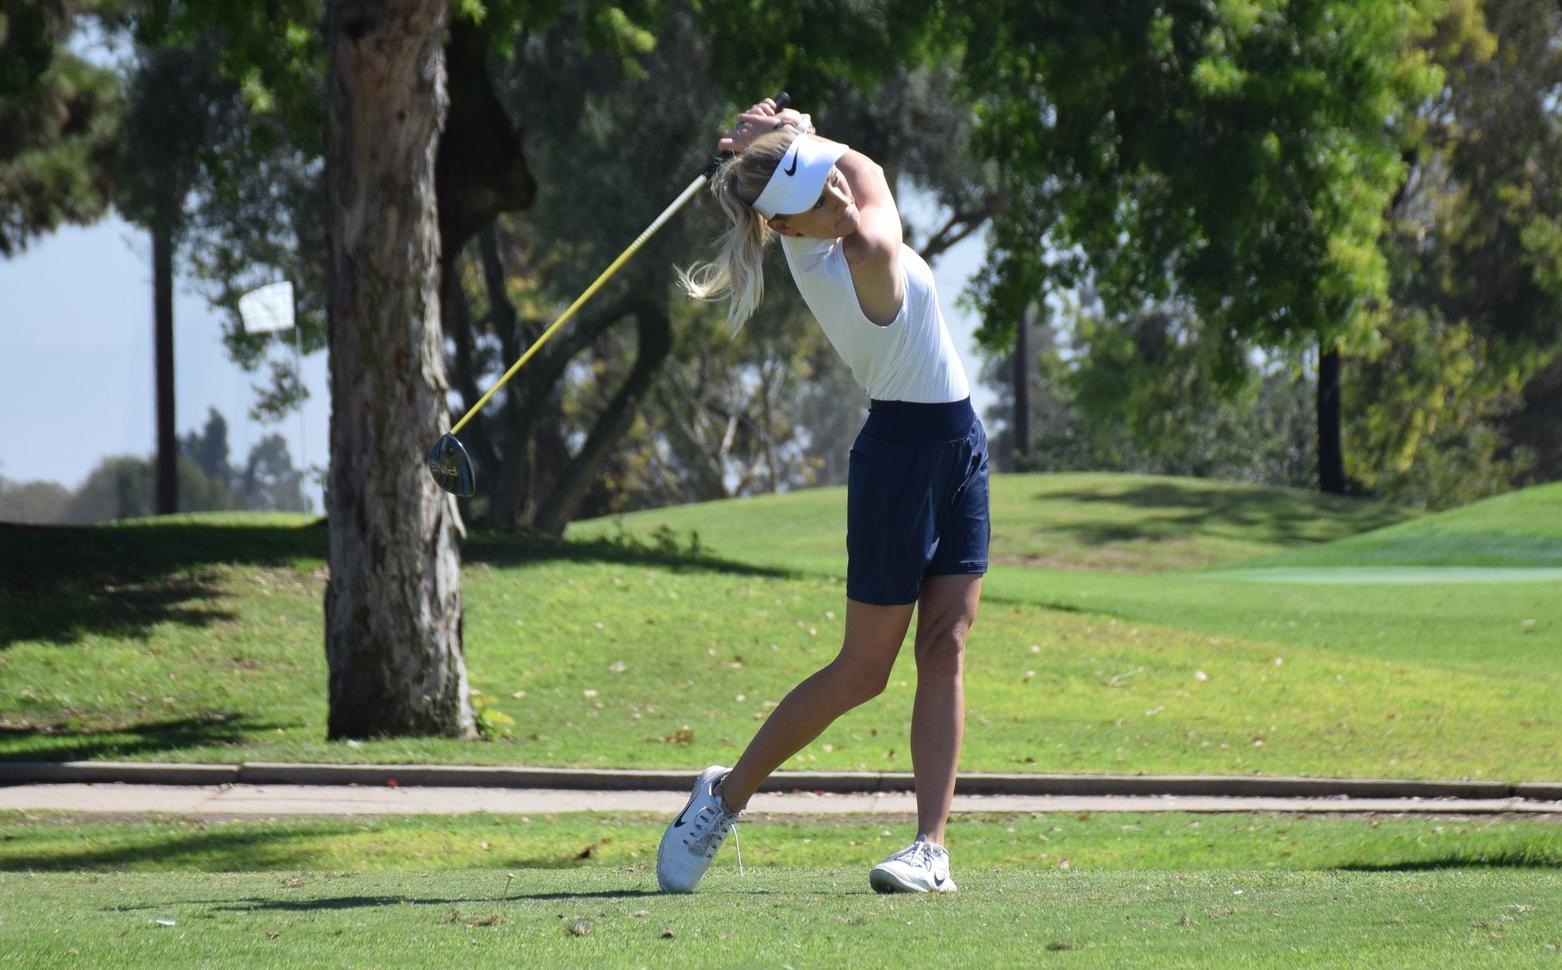 Golfer Katie Stribling earns her third straight medalist honor